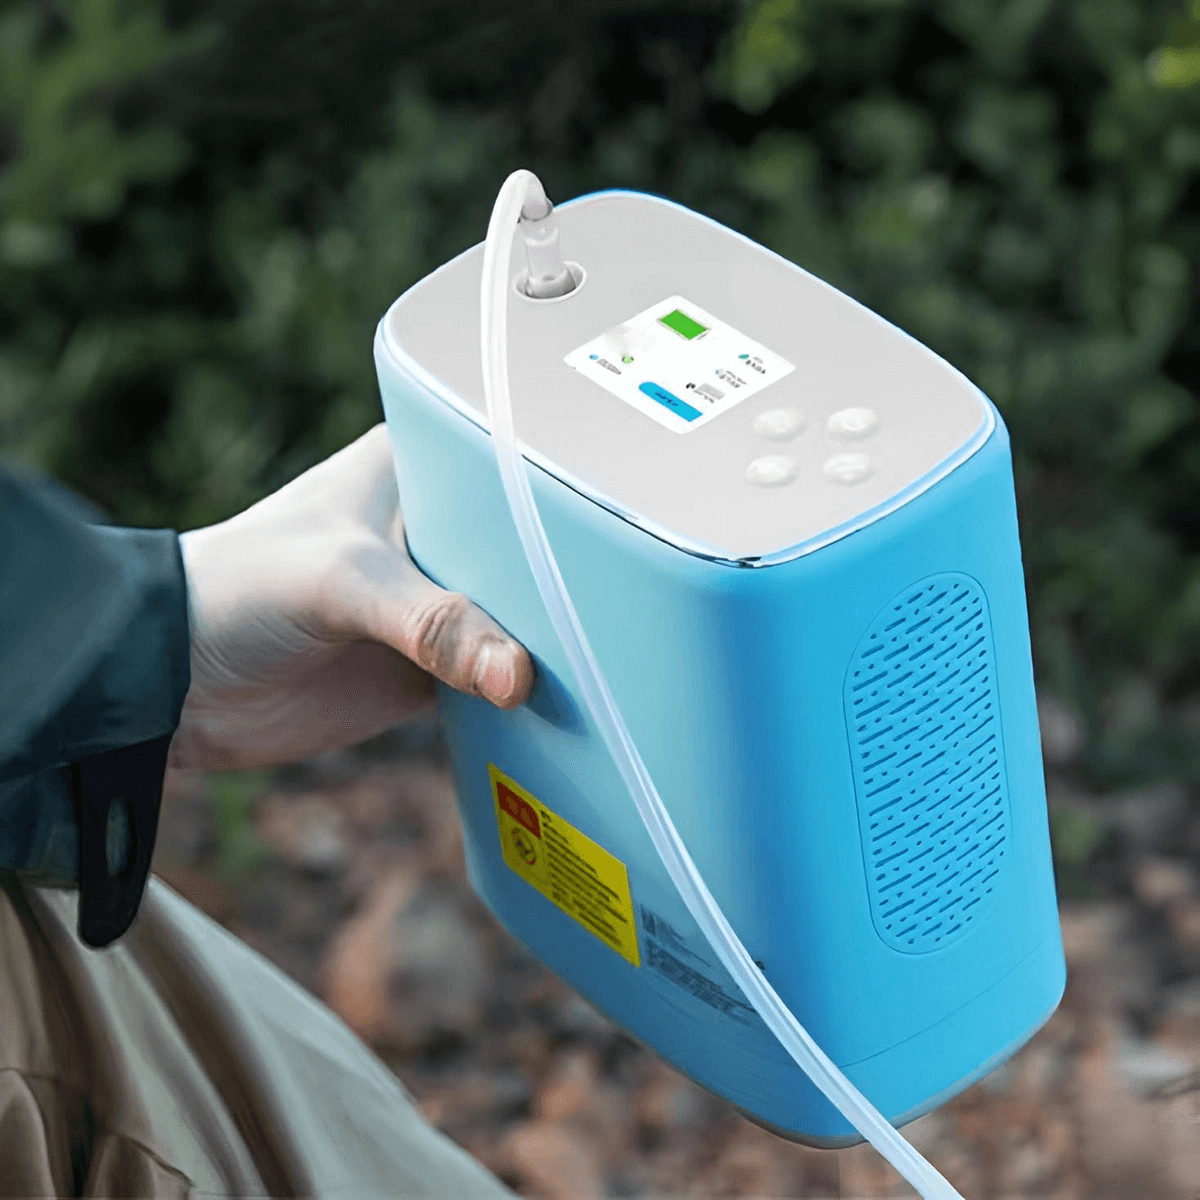 DEDAKJ Mini Portable Oxygen Concentrator 3L Adjustable Mobile Lightweight Oxygen Concentrator with 5000mAh Rechargeable Battery and Shoulder Bag